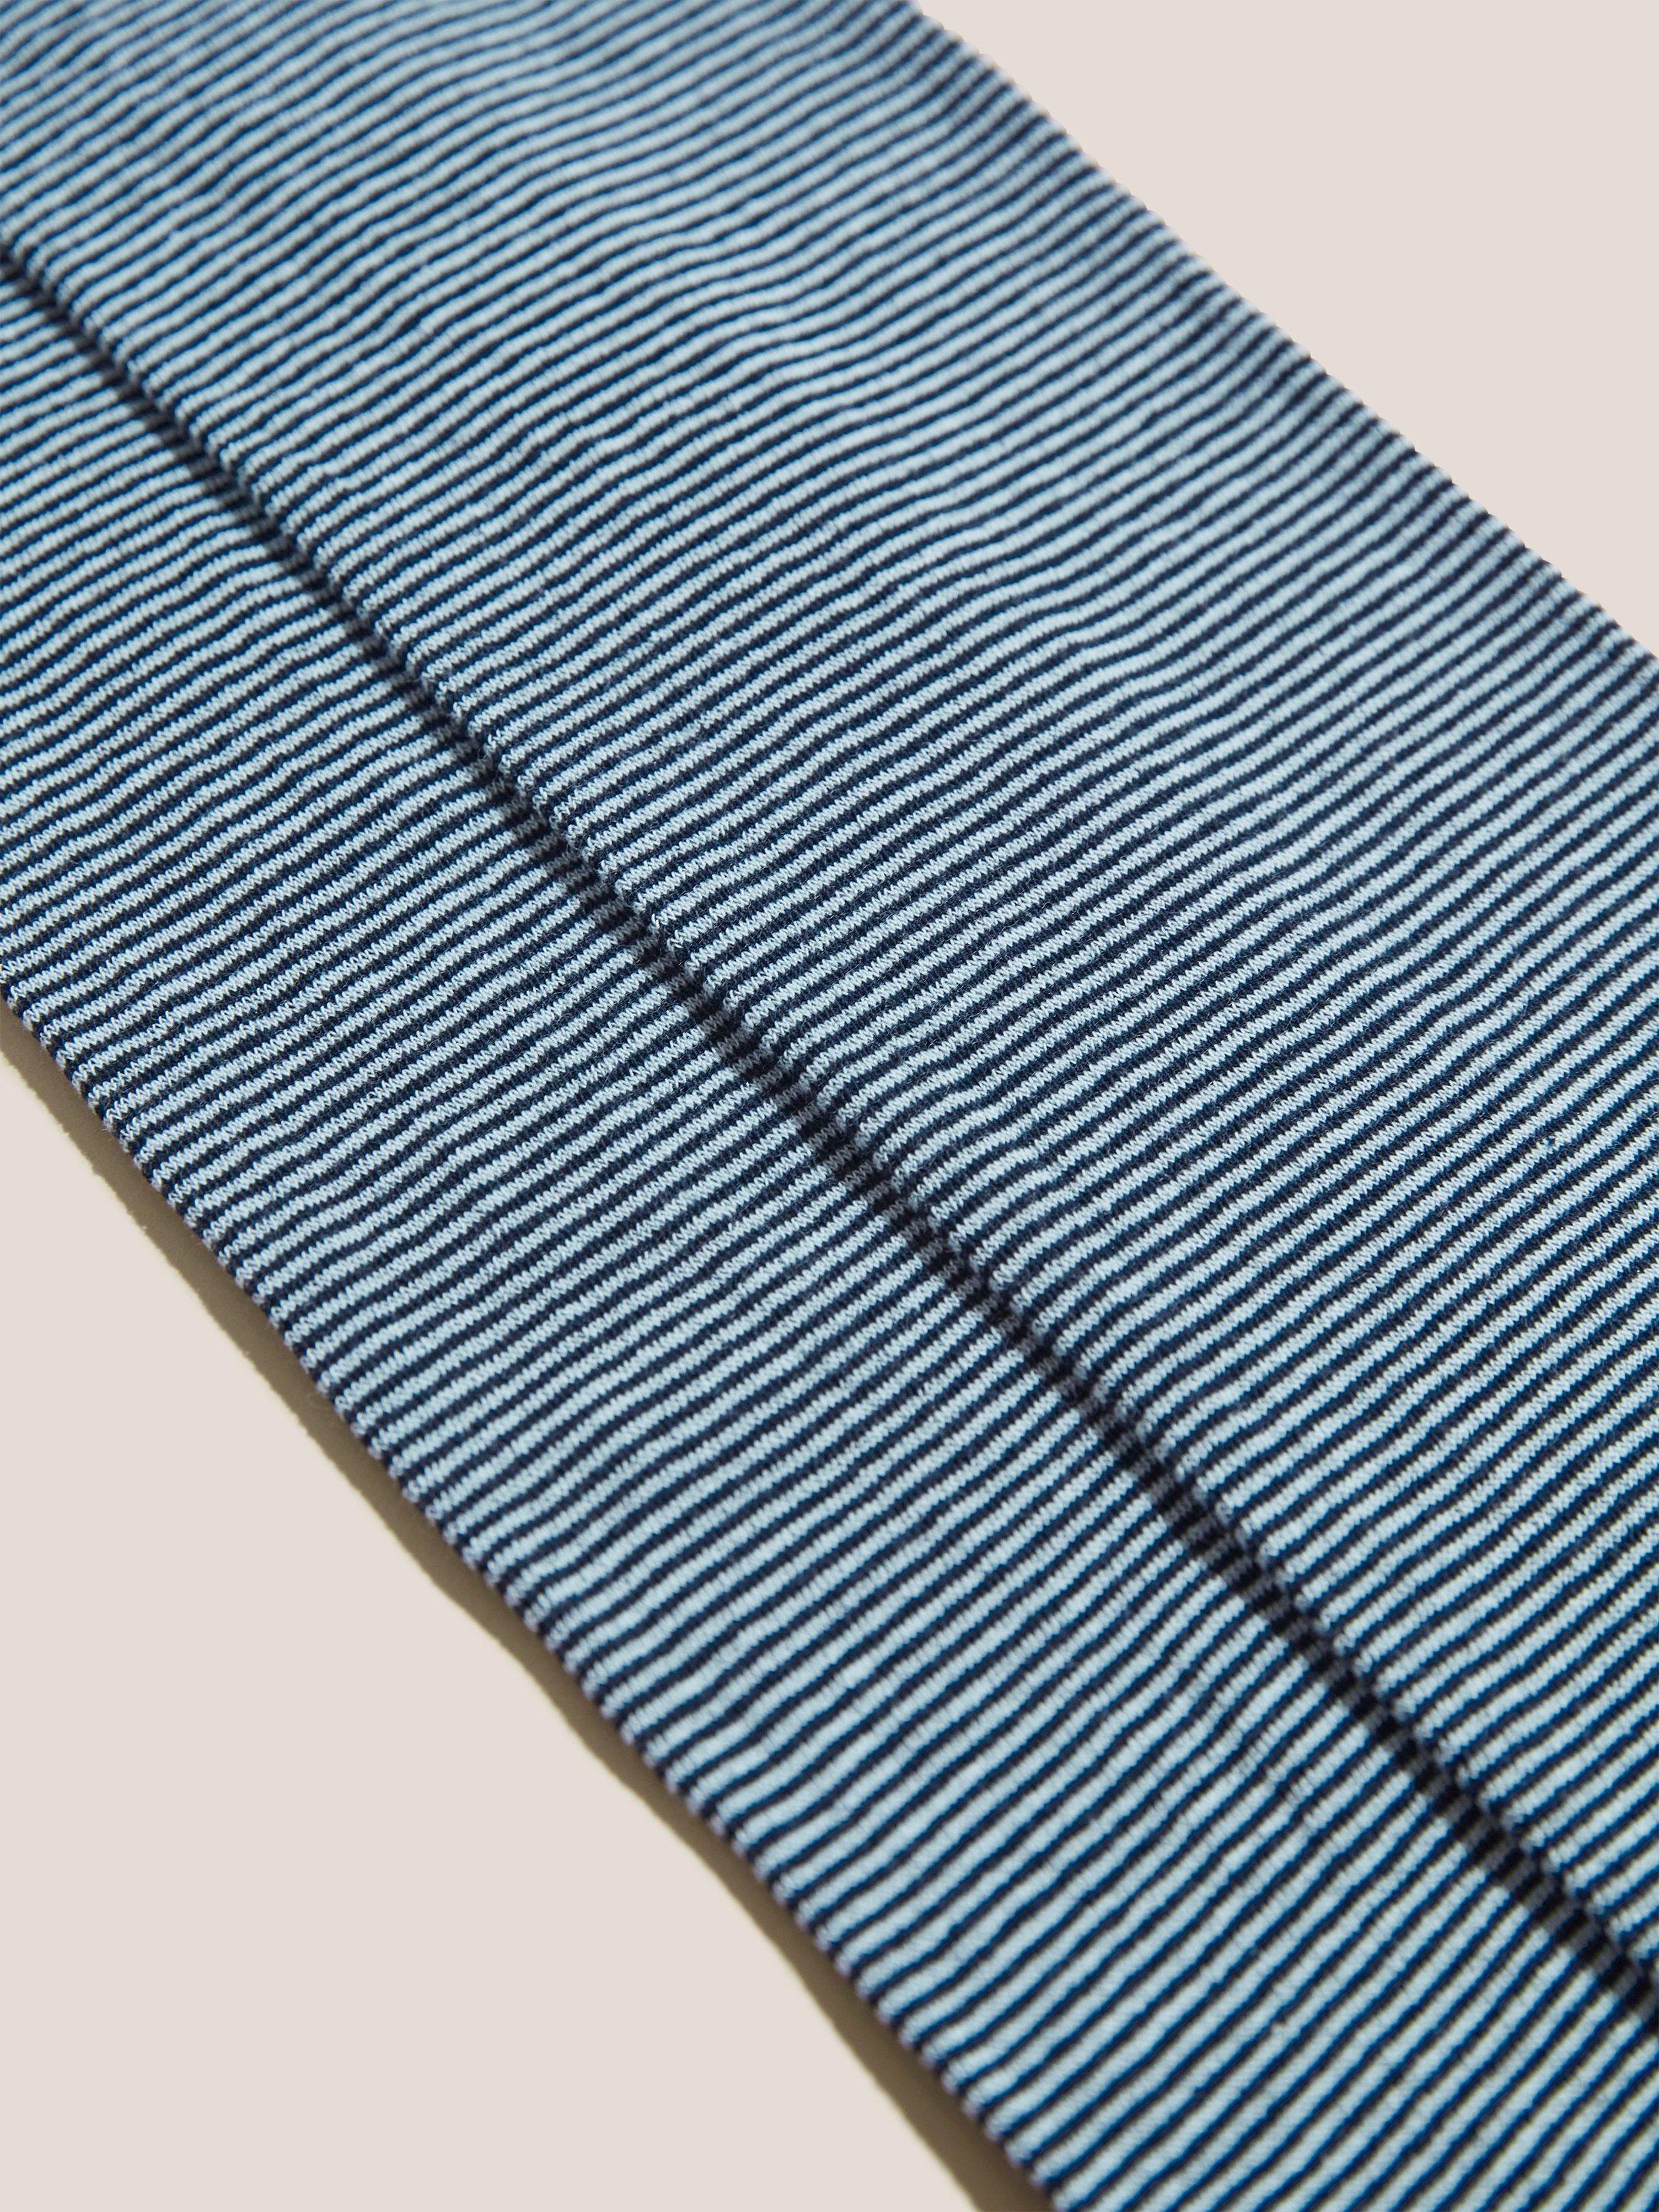 Fine Soft Stripe Tights in BLUE MLT - FLAT DETAIL